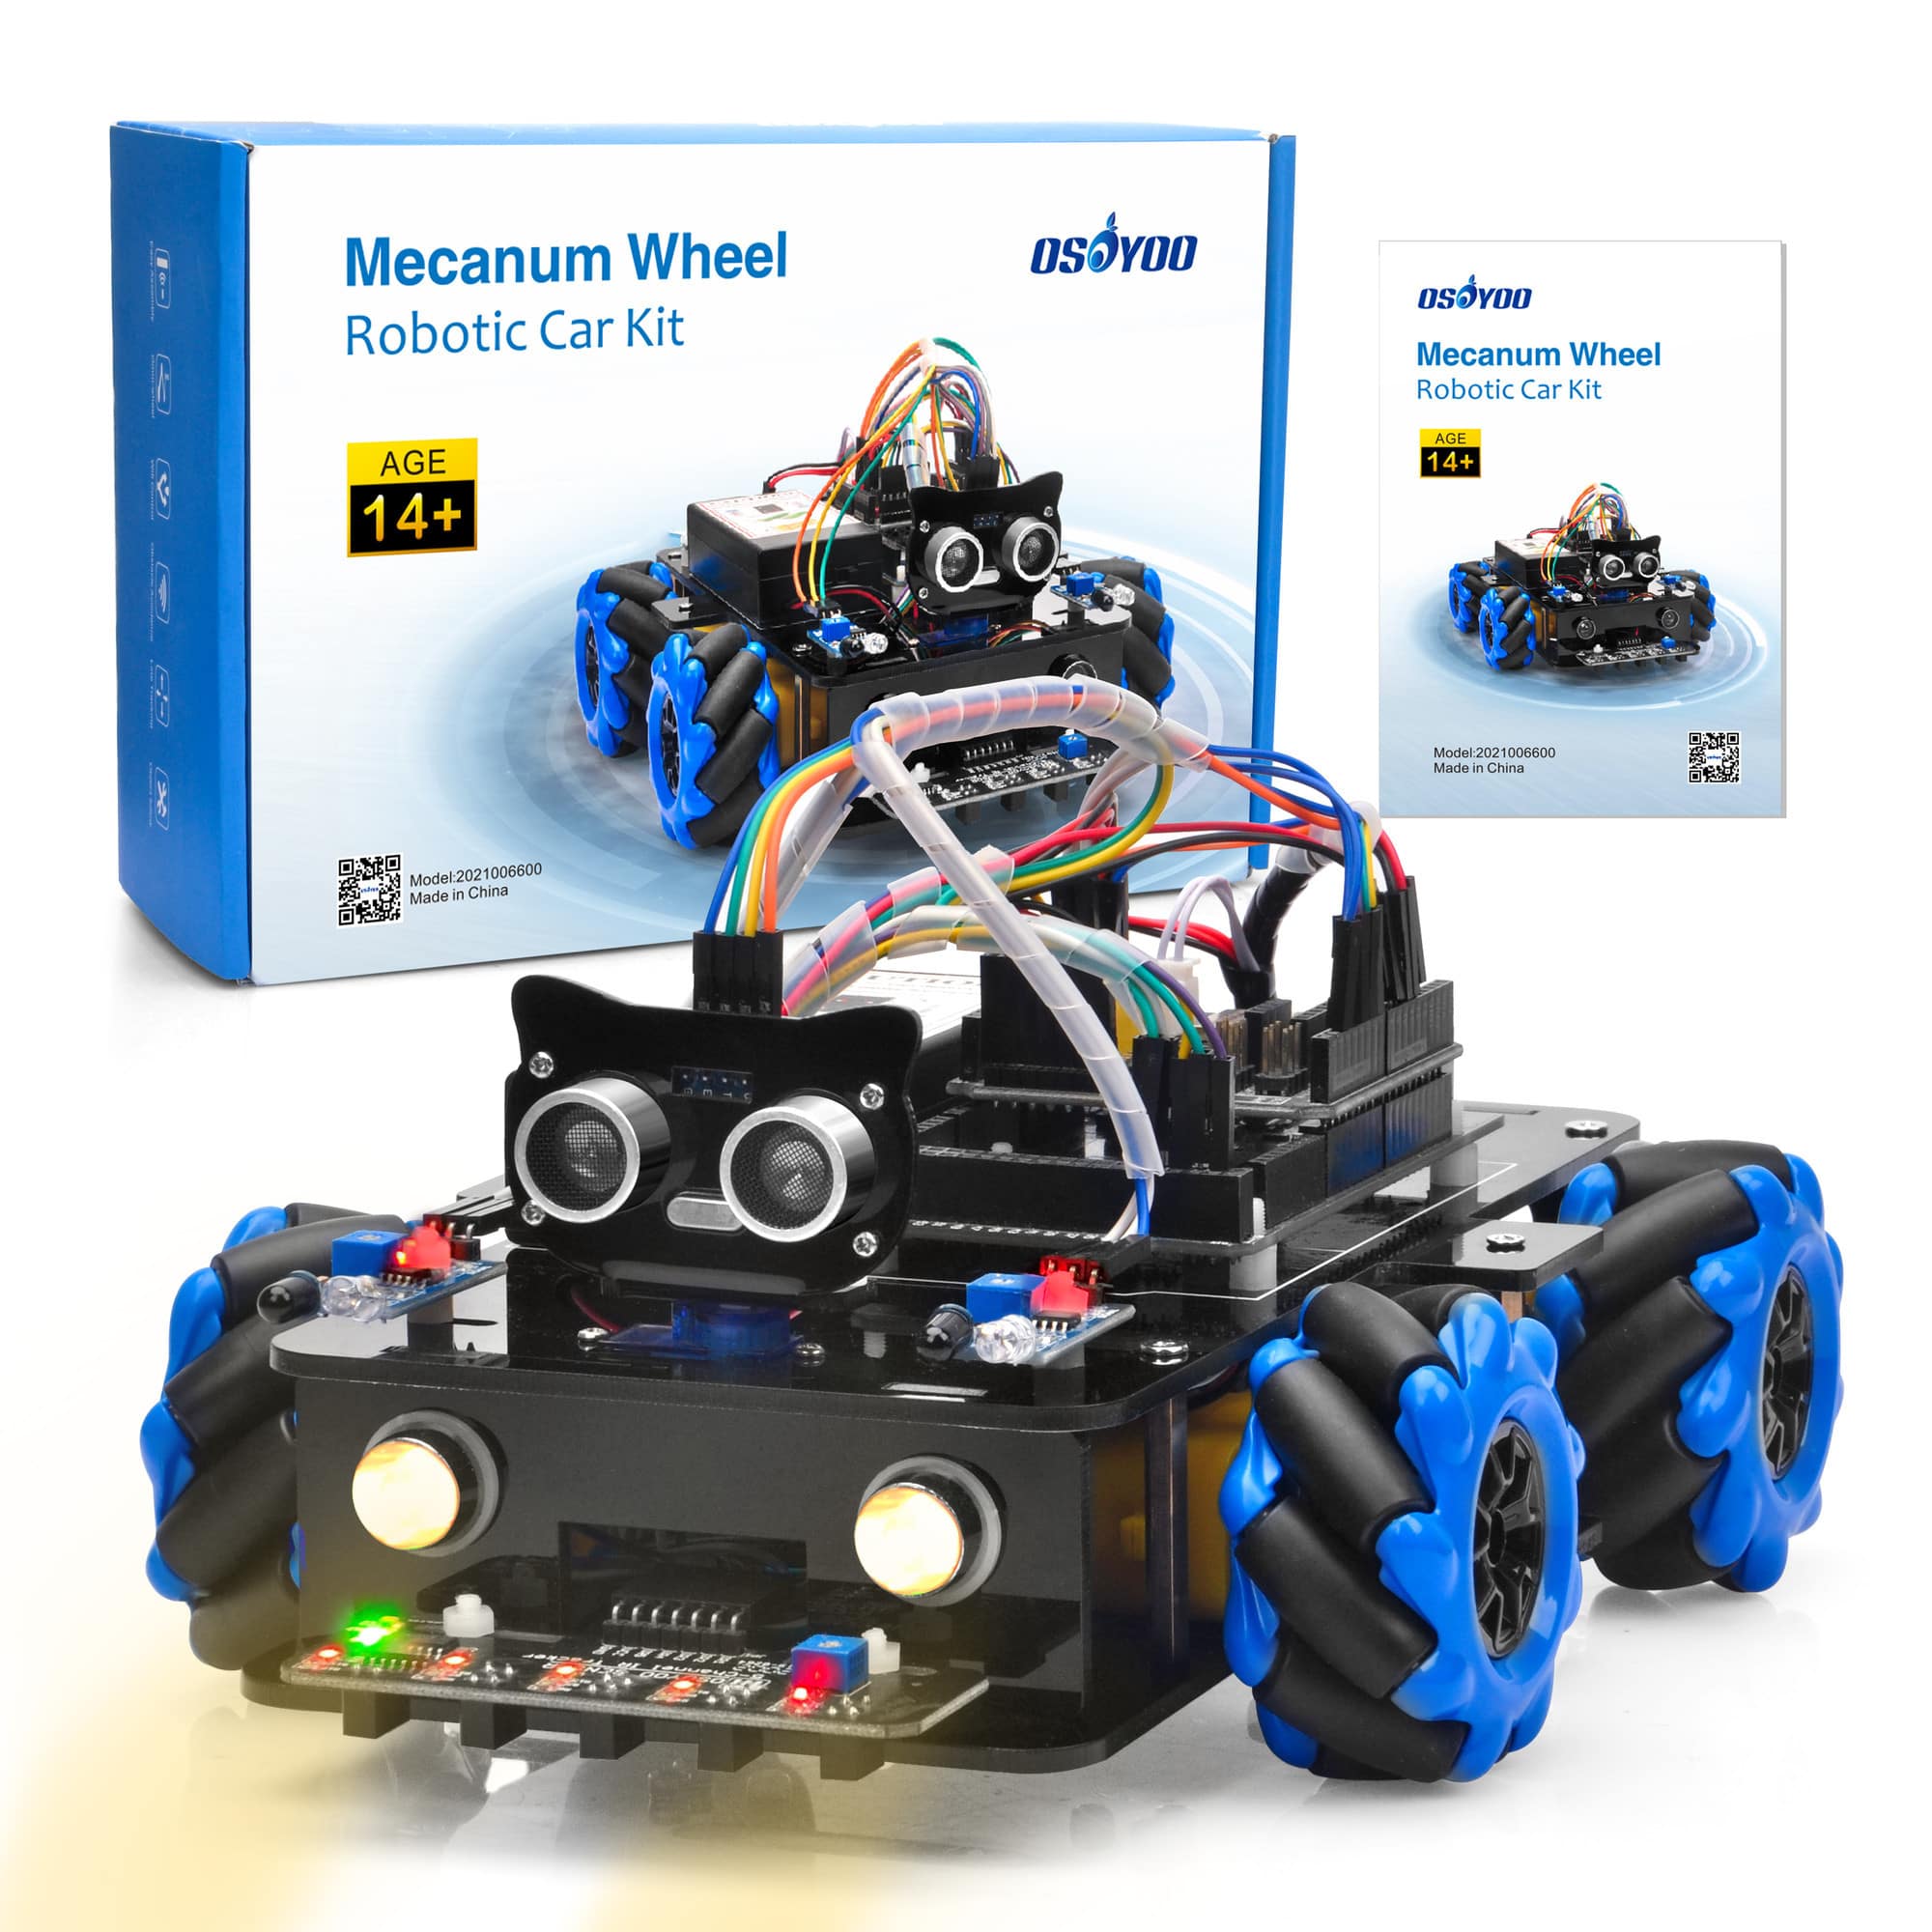 V2.0 Mecanum Wheel Robotic Kit for Arduino Mega2560 Introduction